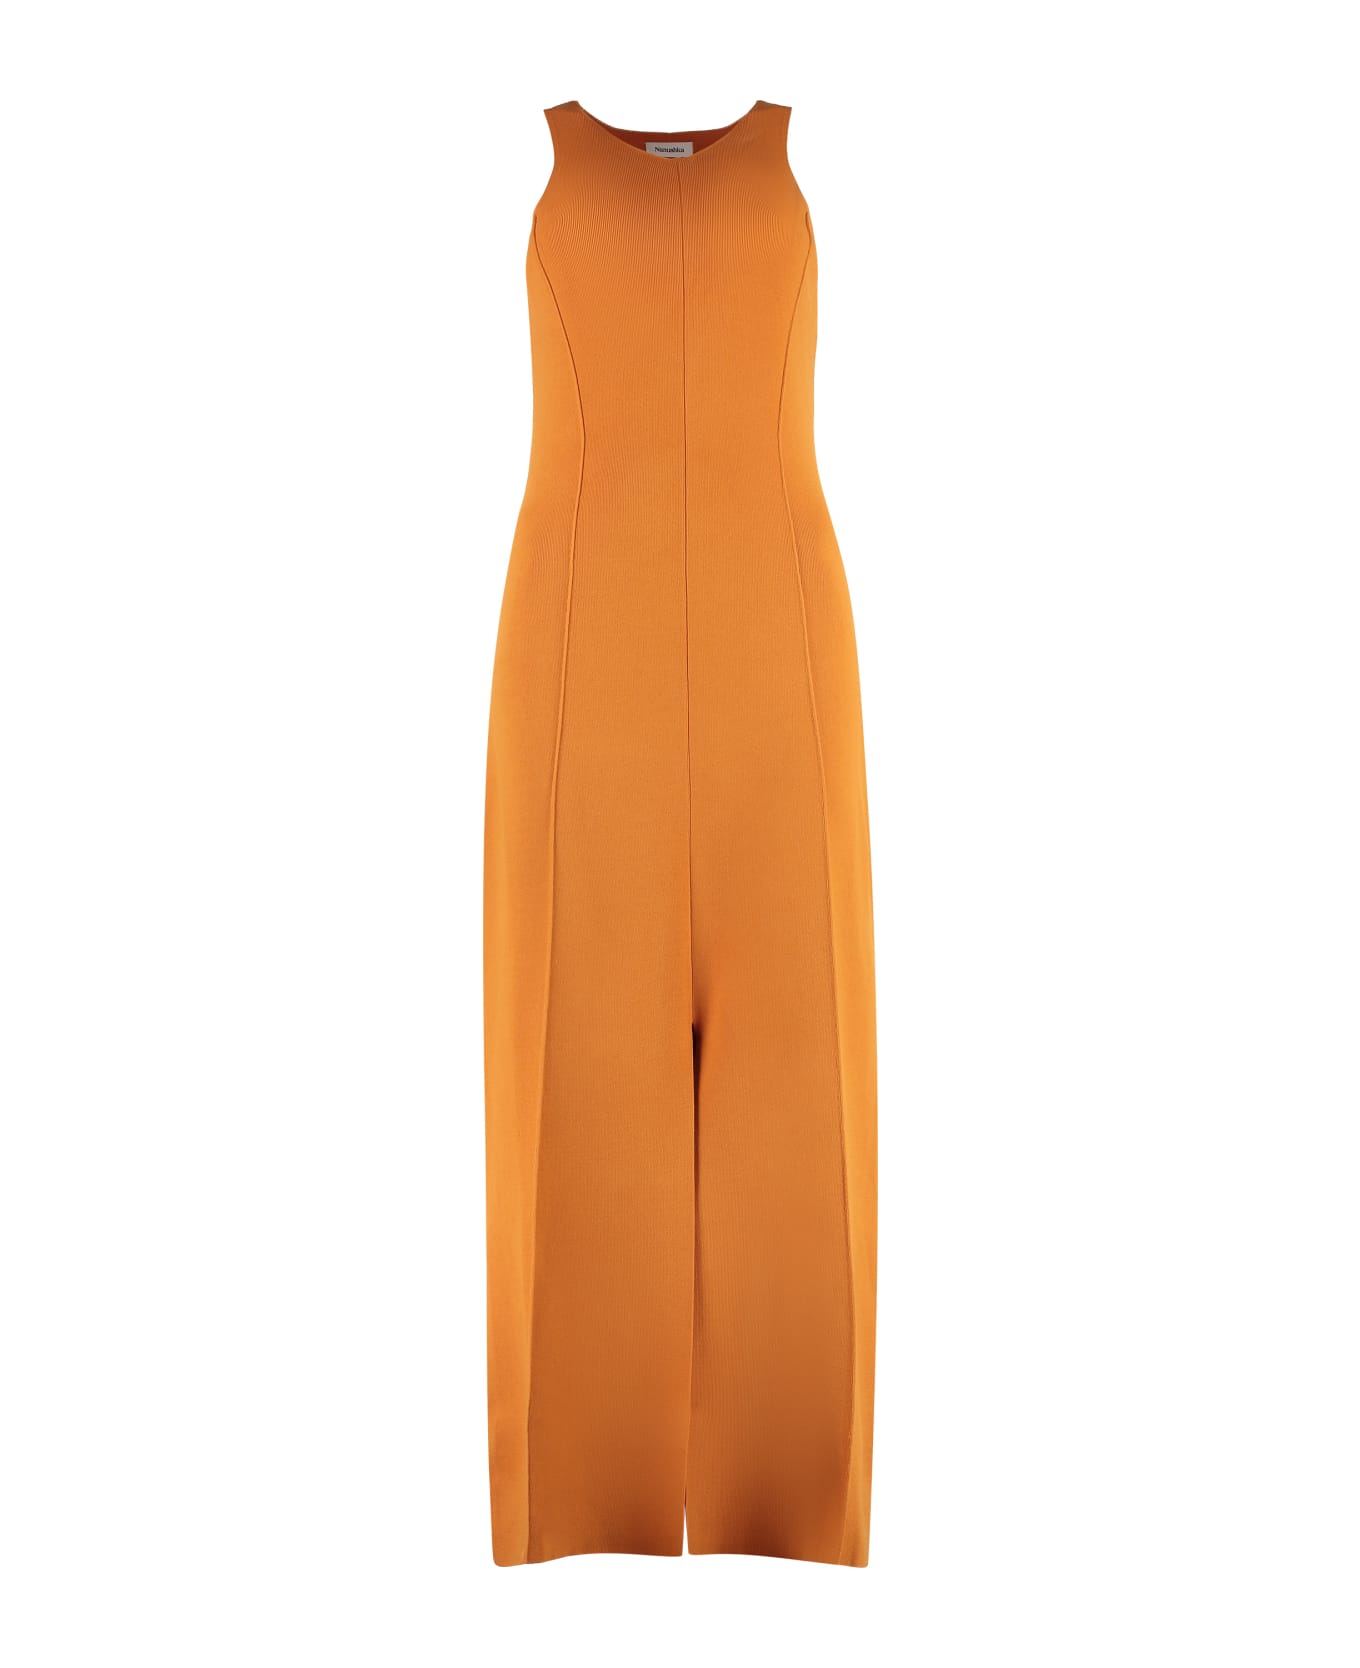 Nanushka Elia Midi Viscose Dress - Orange